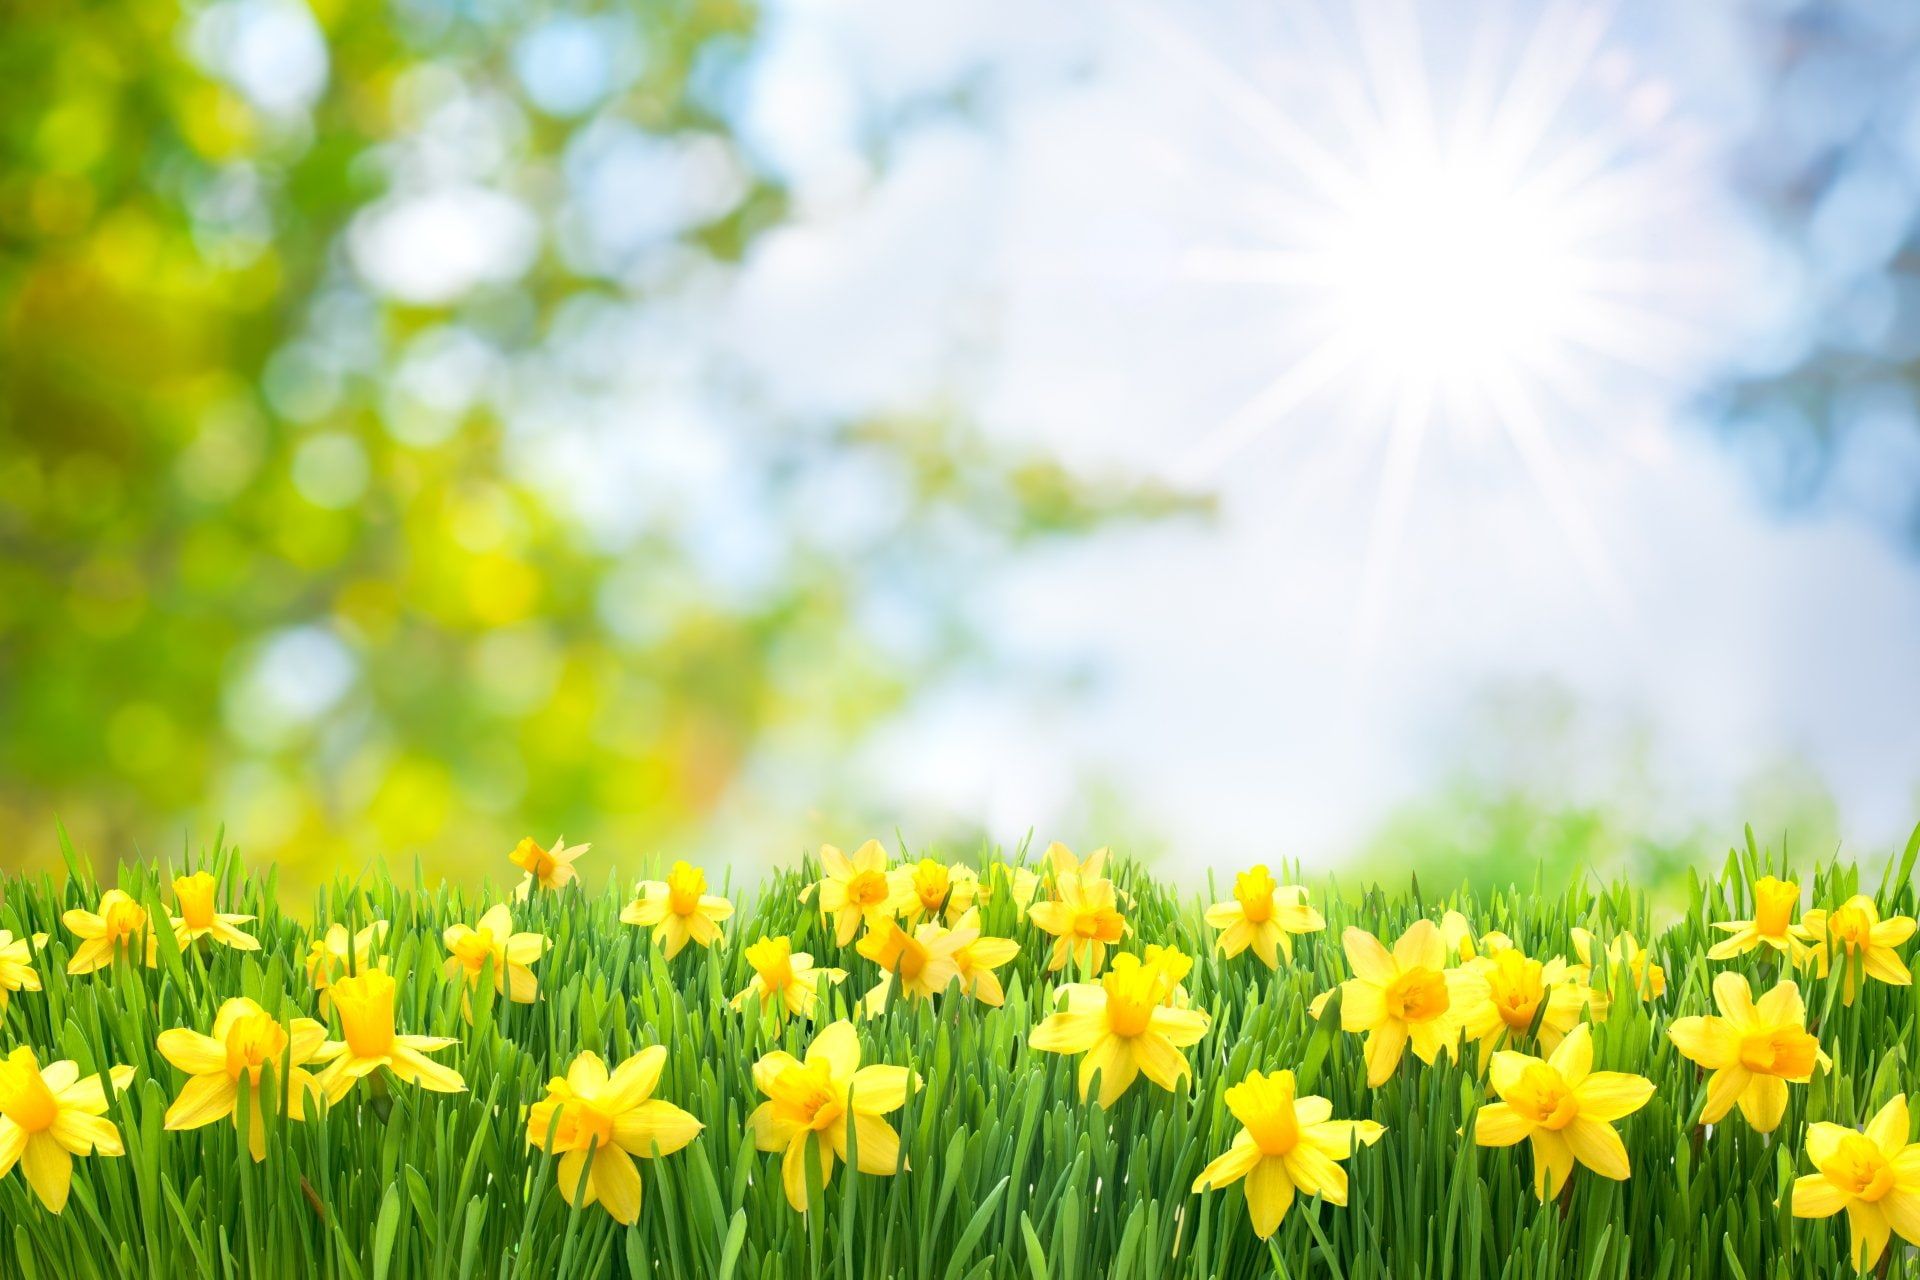 Yellow daffodil flower field HD wallpaper free download